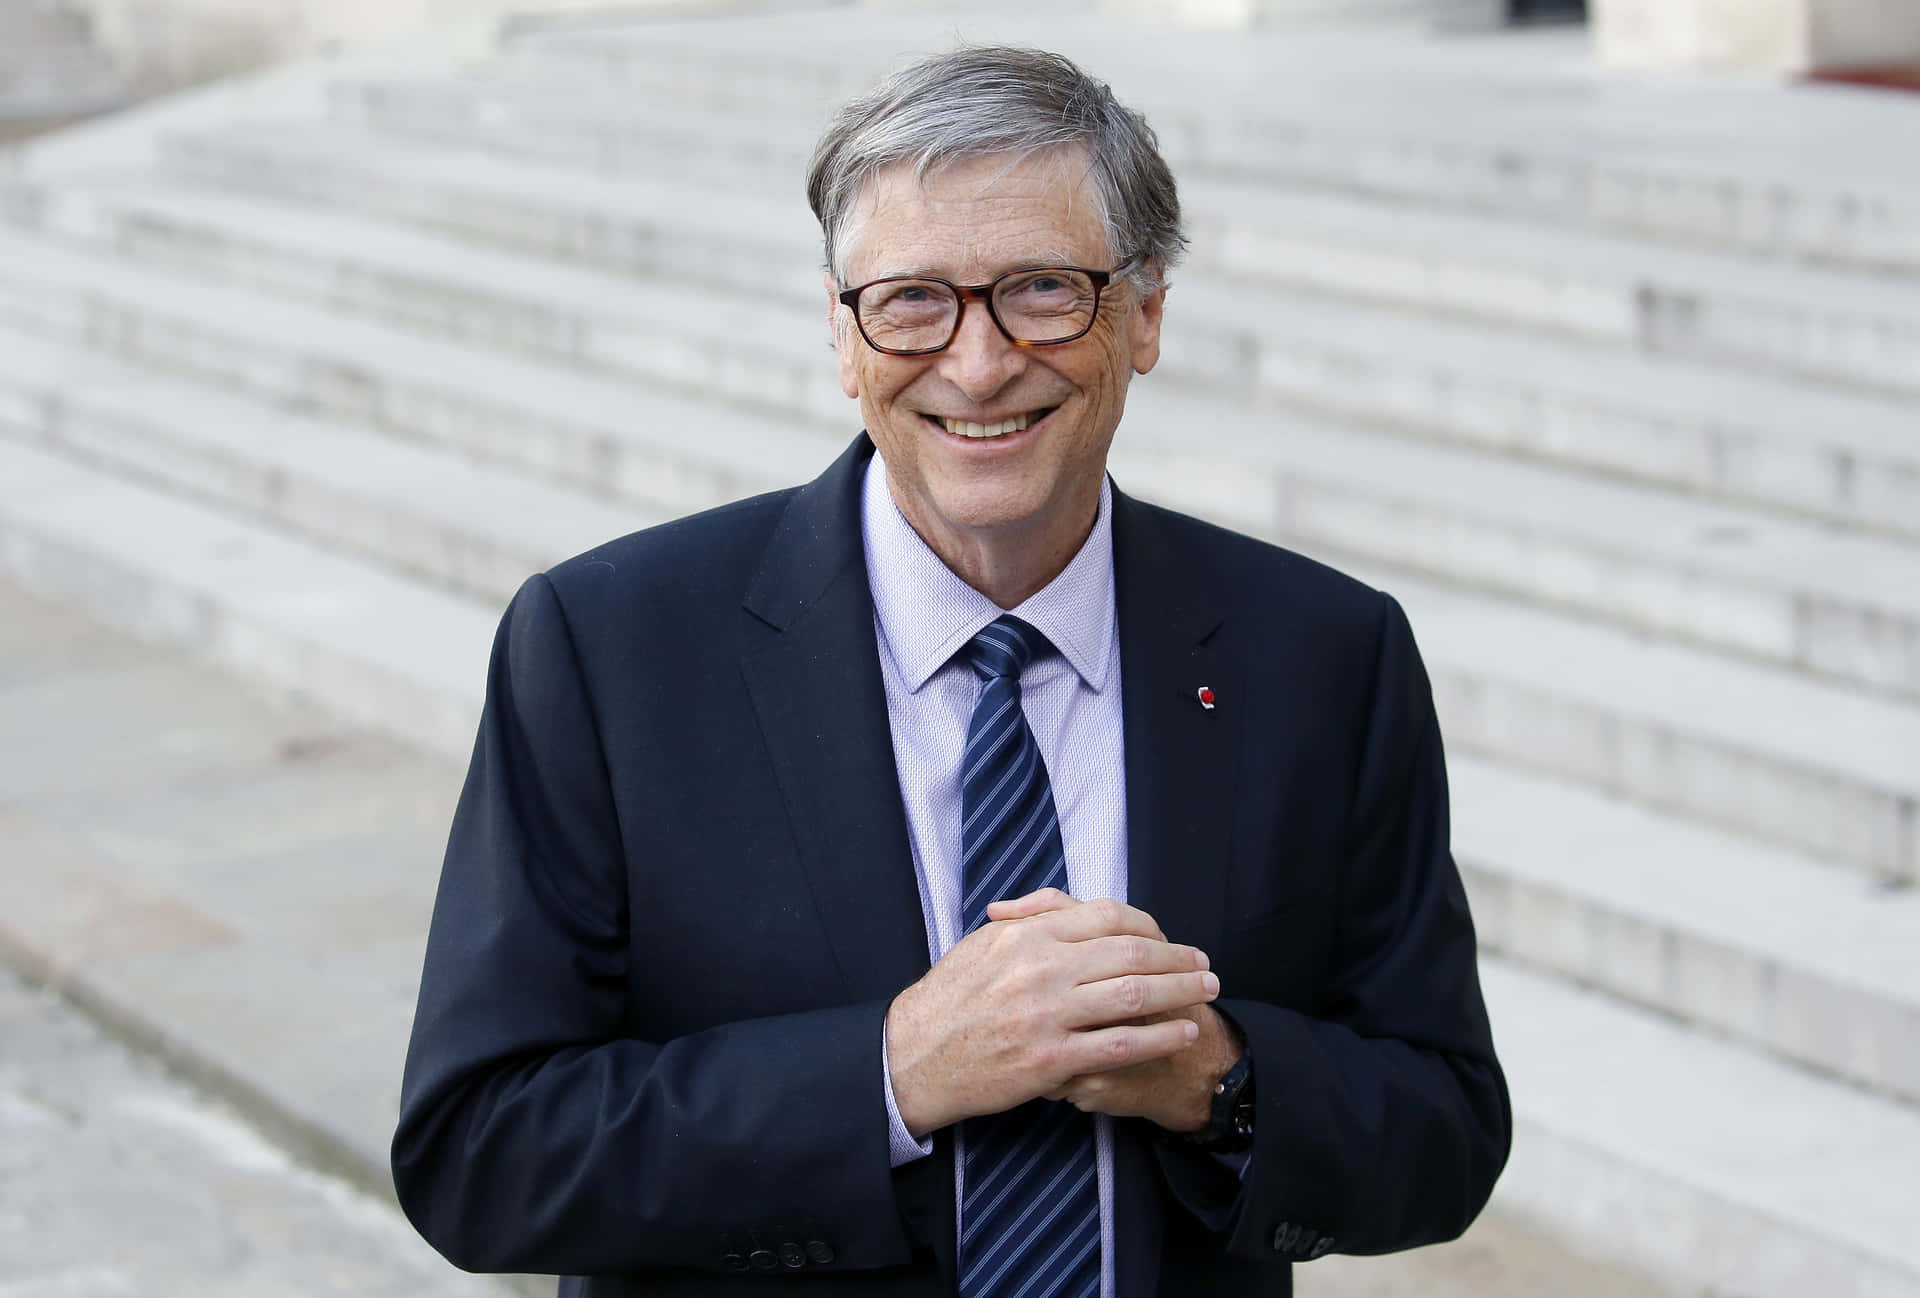 Bill Gates, Microsoft co-founder and entrepreneur